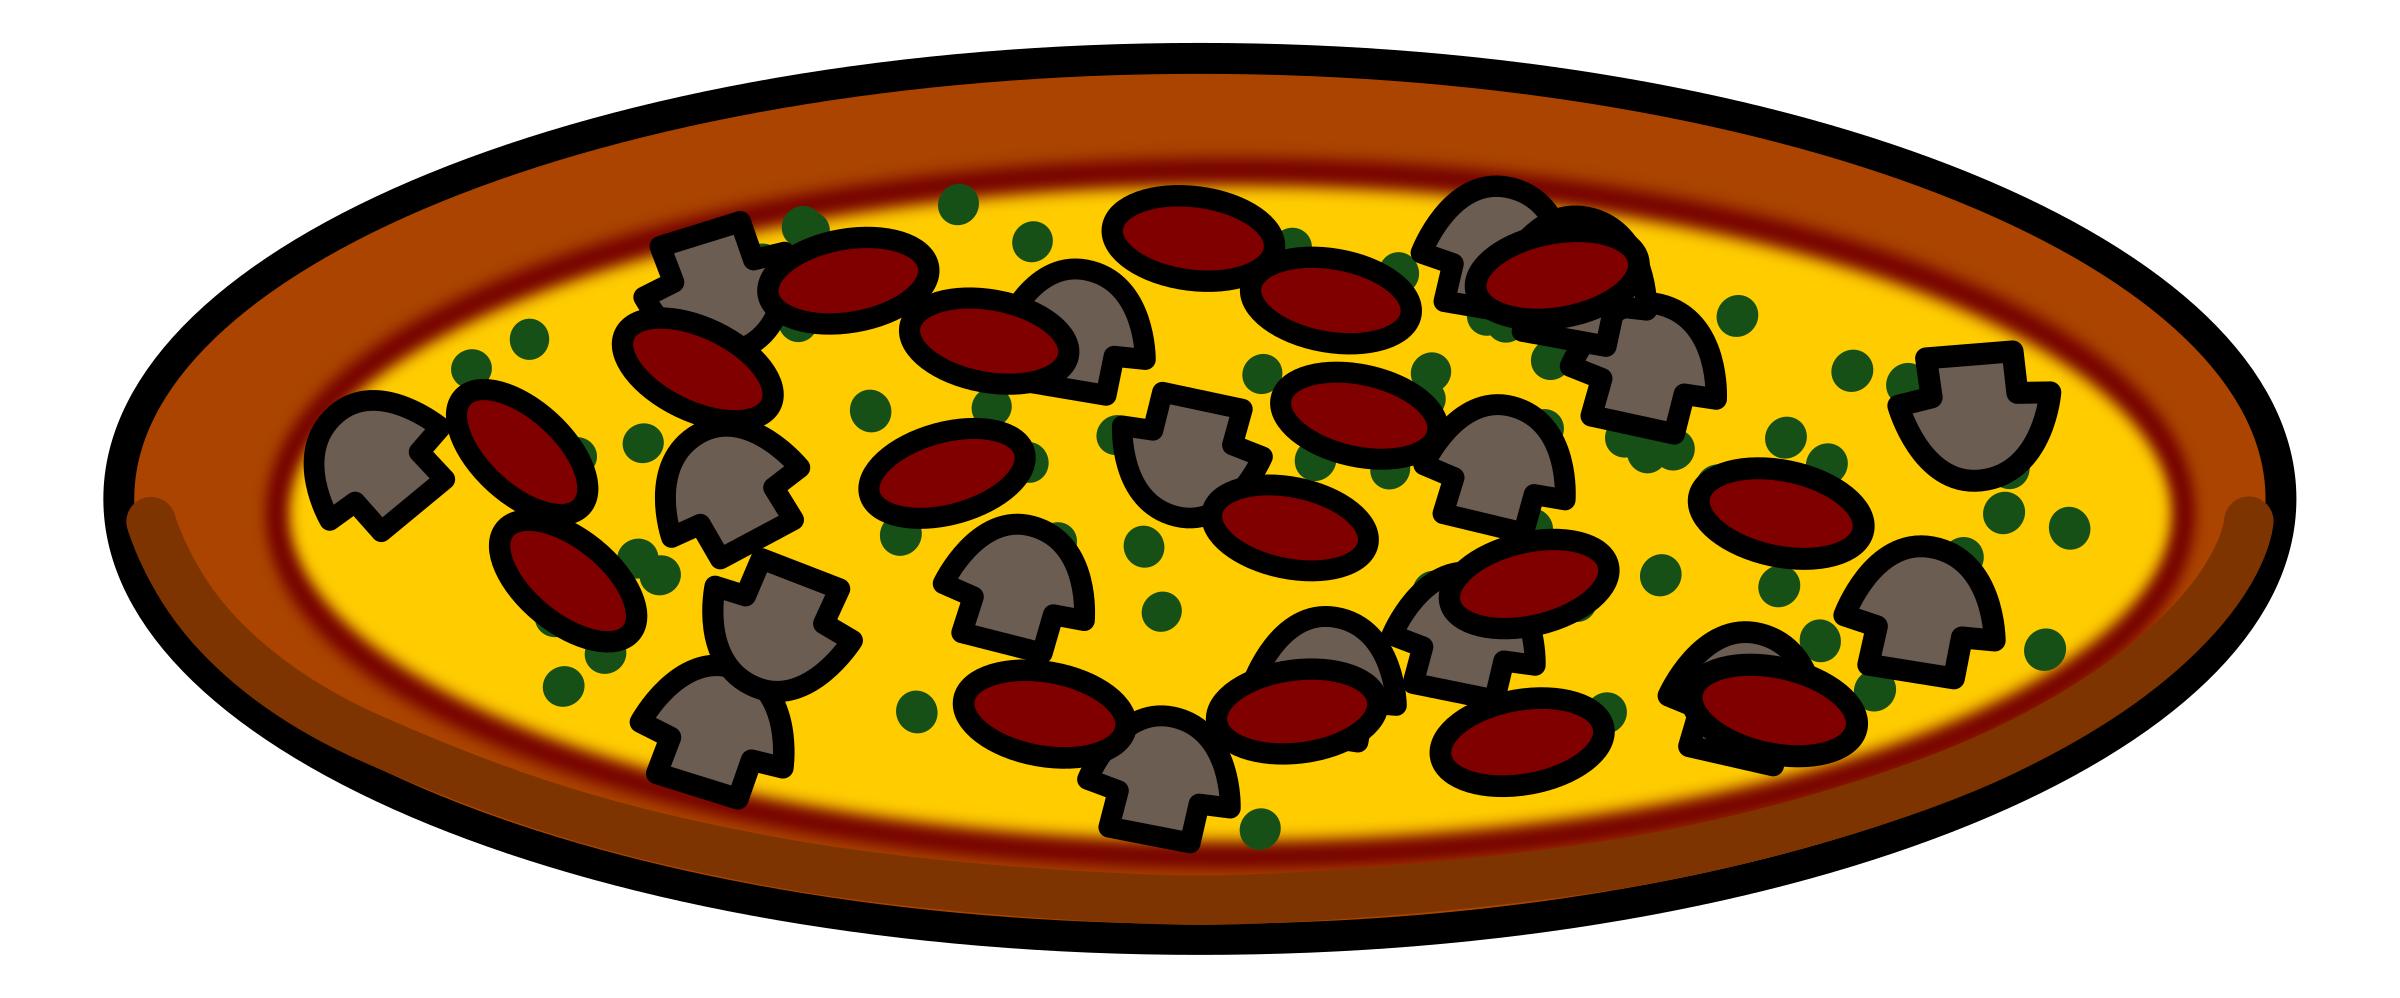 The Rejon Pizza png